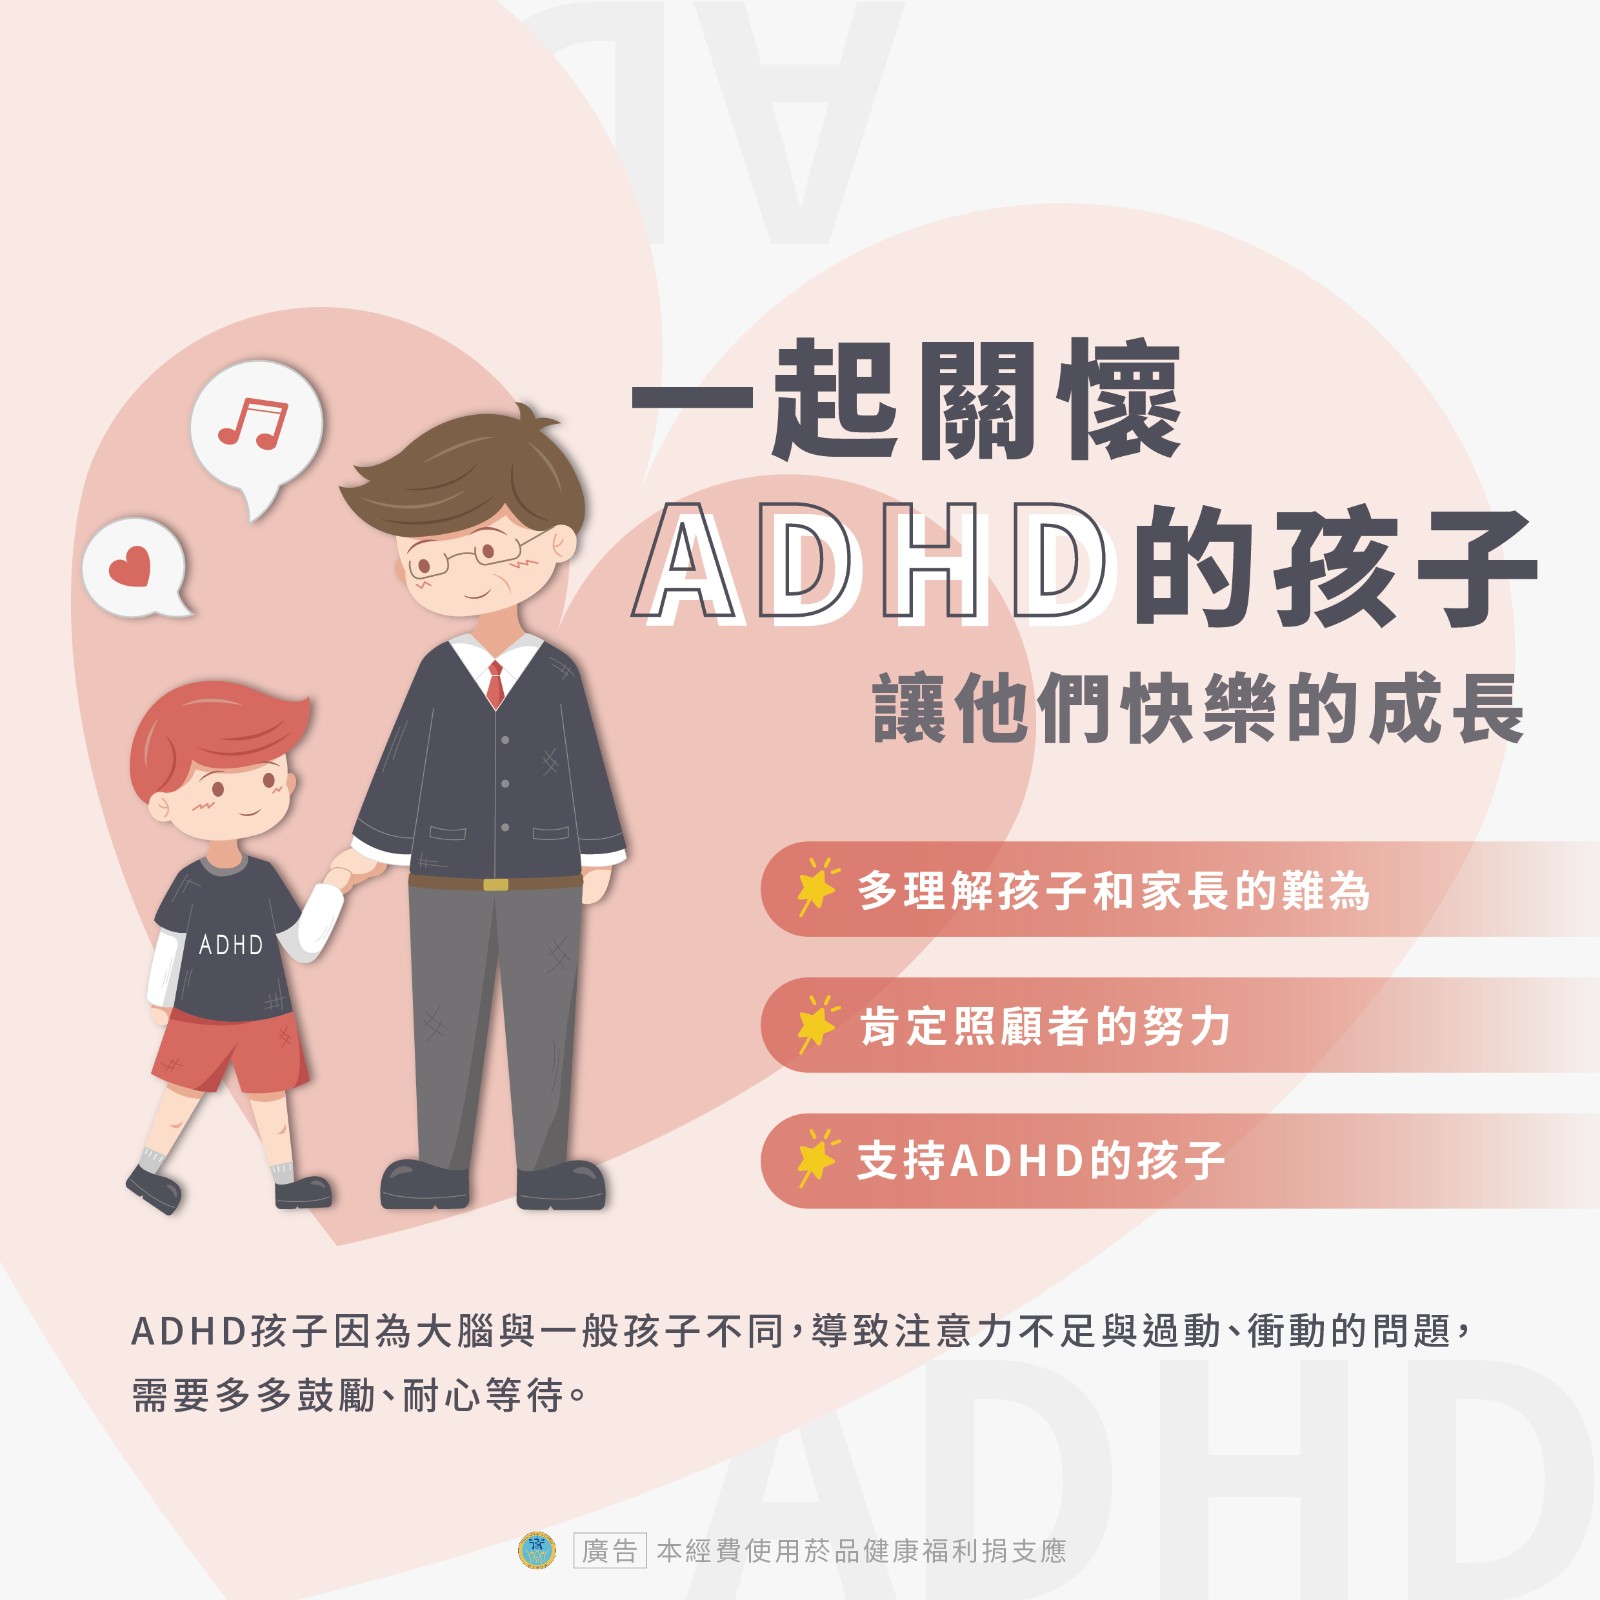 ADHD衛教懶人包圖卡06.jpg